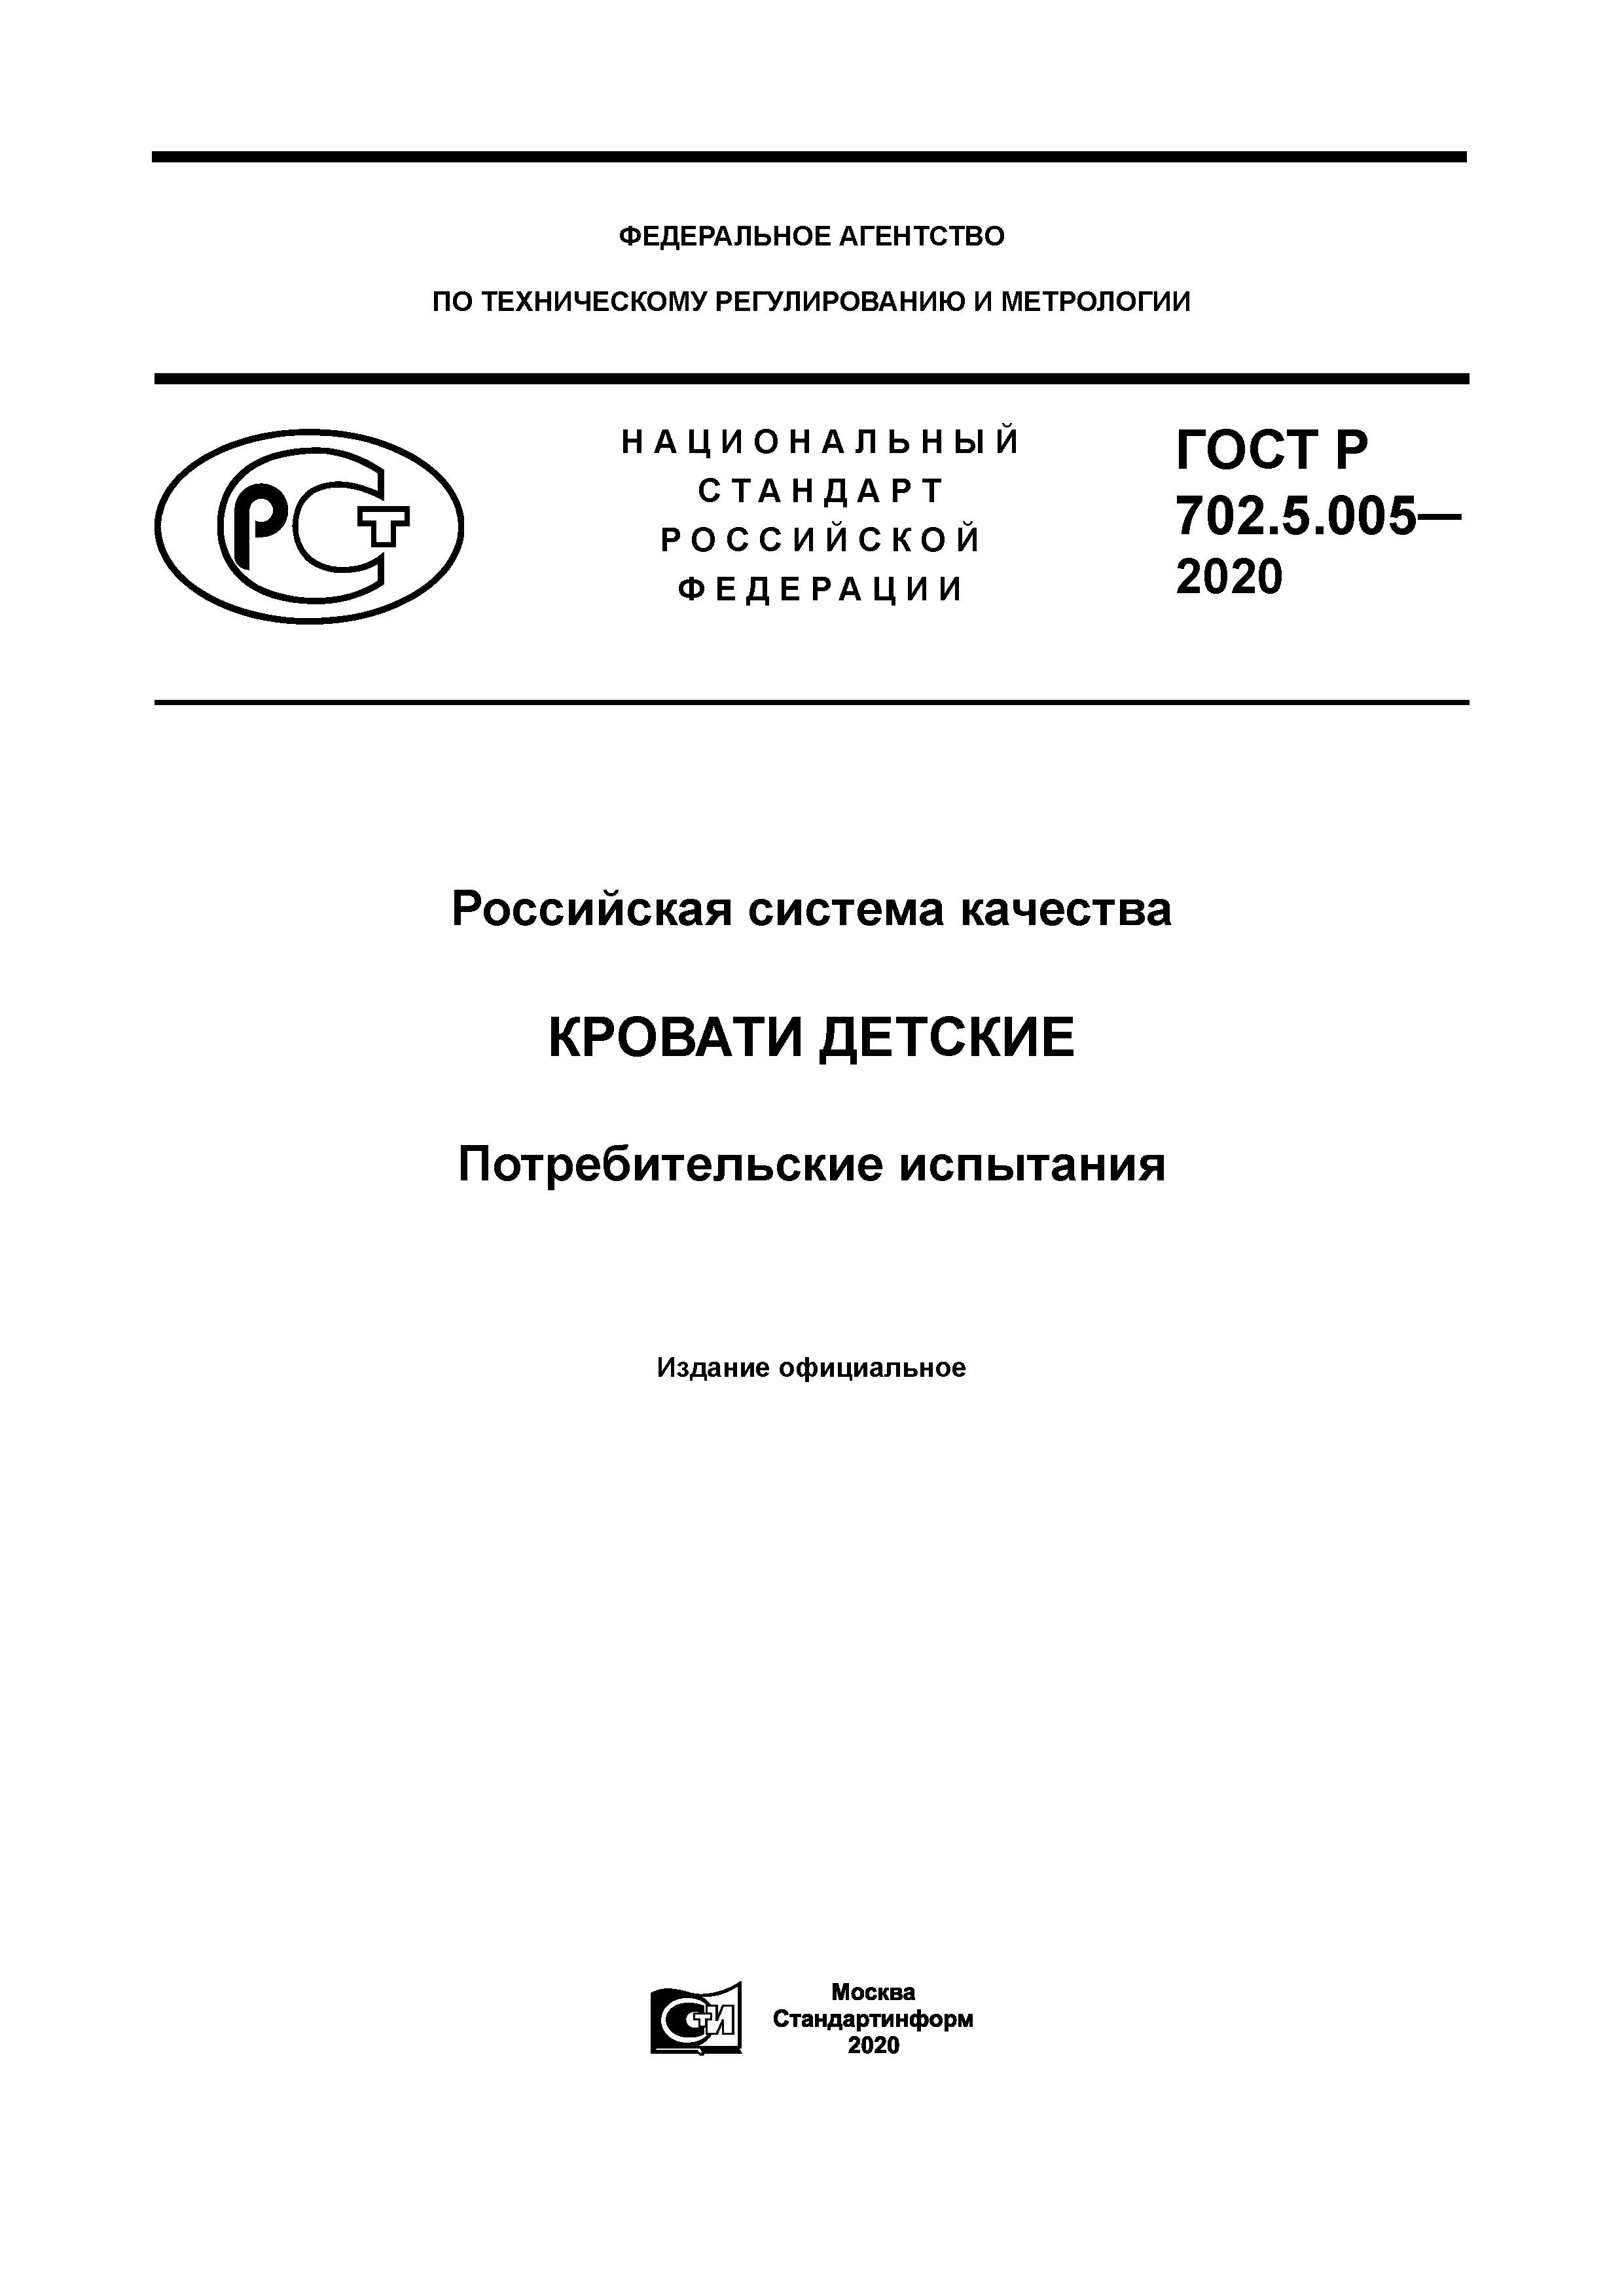 ГОСТ Р 702.5.005-2020